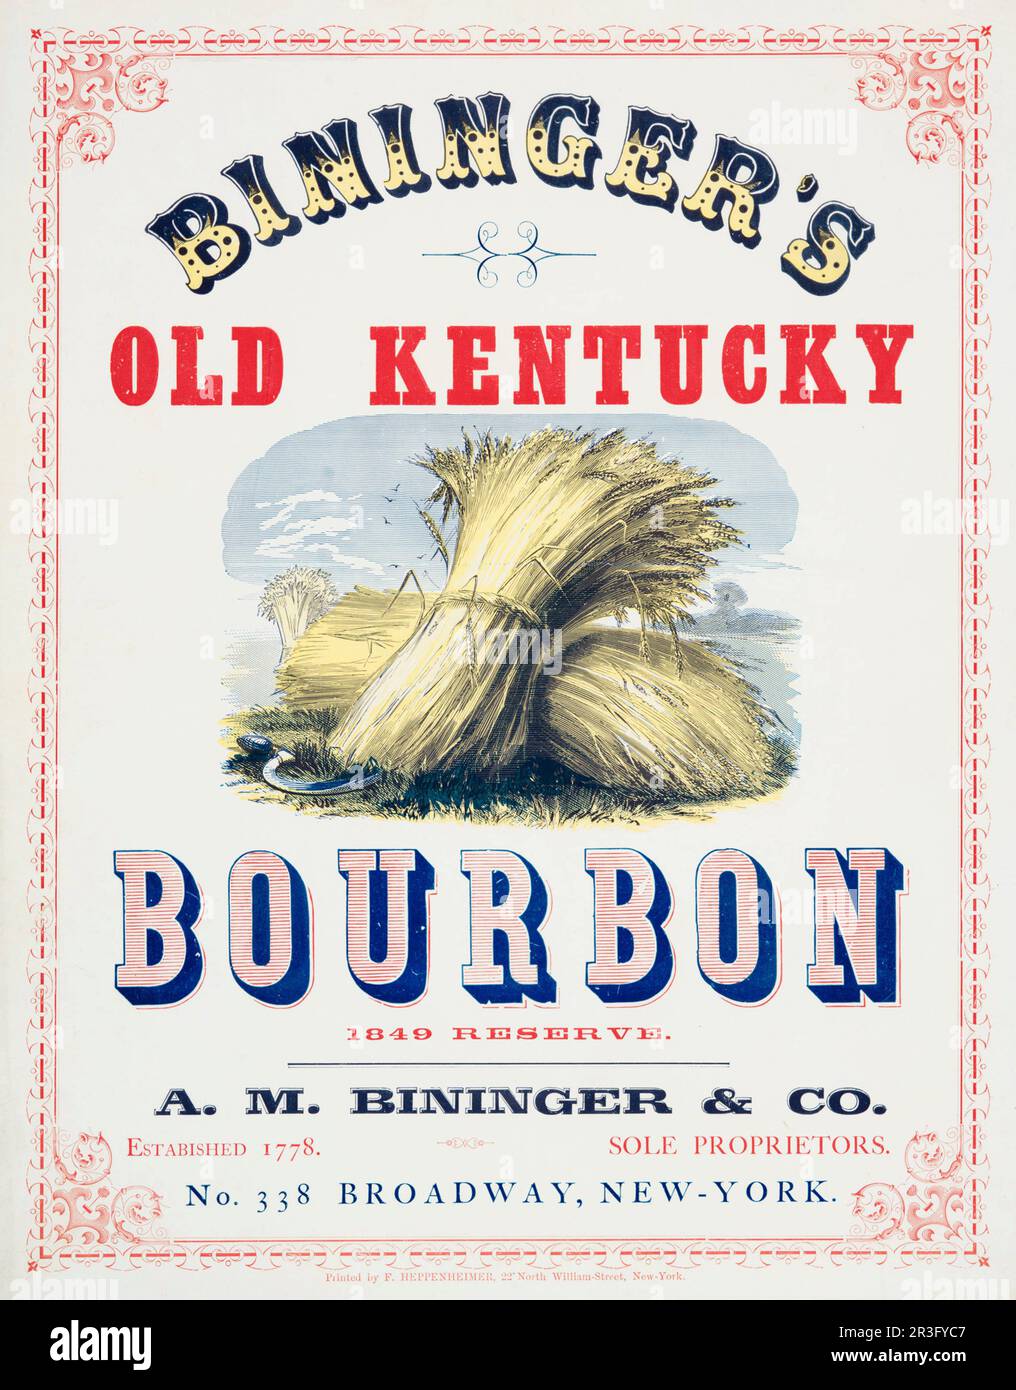 Vintage advertisement for Bininger's old Kentucky bourbon 1849 reserve. Stock Photo